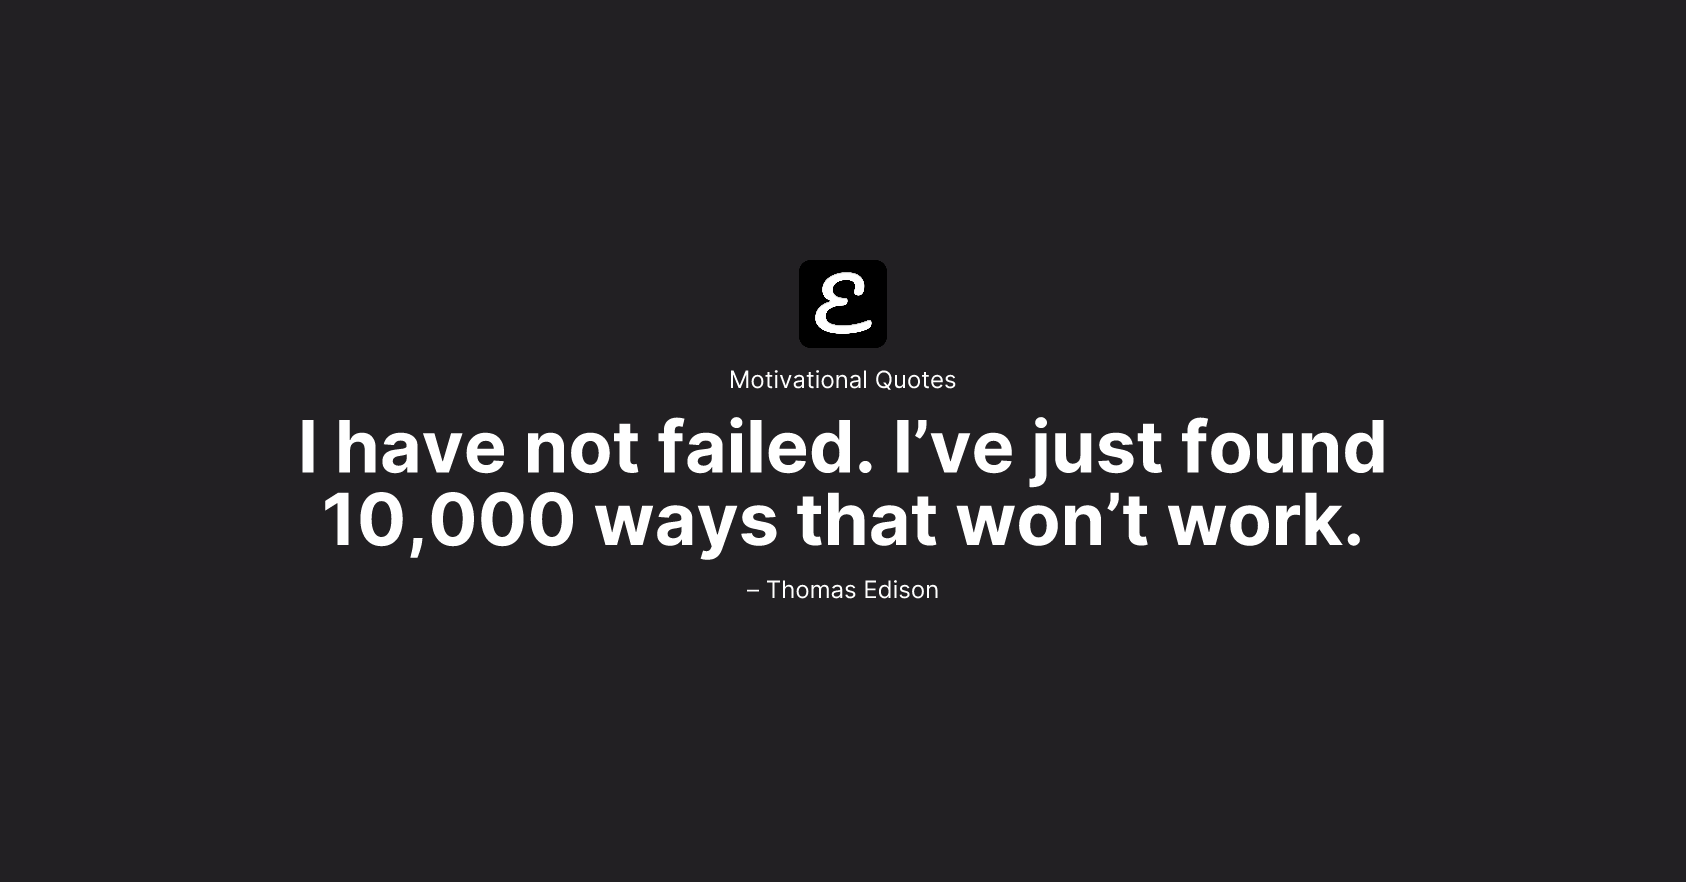 Thomas Edison - I have not failed. I’ve just found 10,000 ways that won’t work.